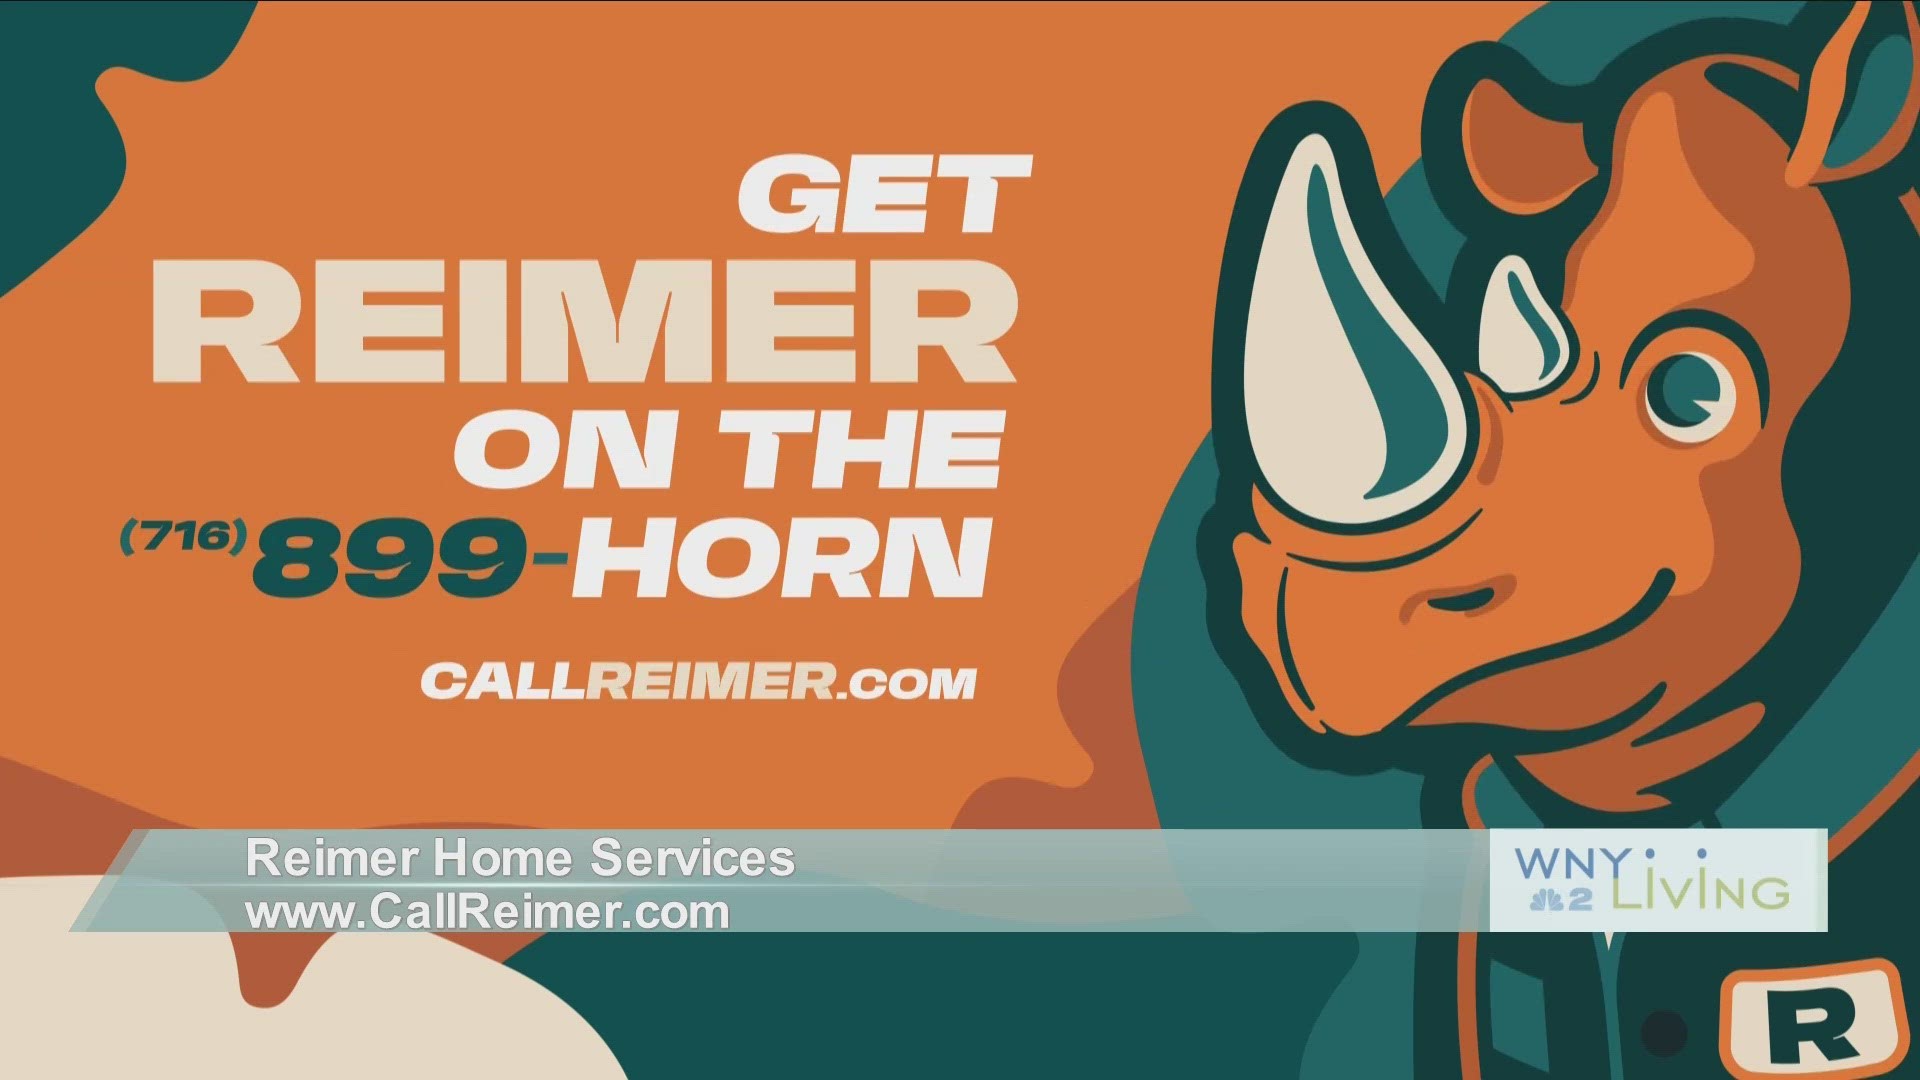 WNY Living - September 23 - Reimer Home Services (THIS VIDEO IS SPONSORED BY REIMER HOME SERVICES)